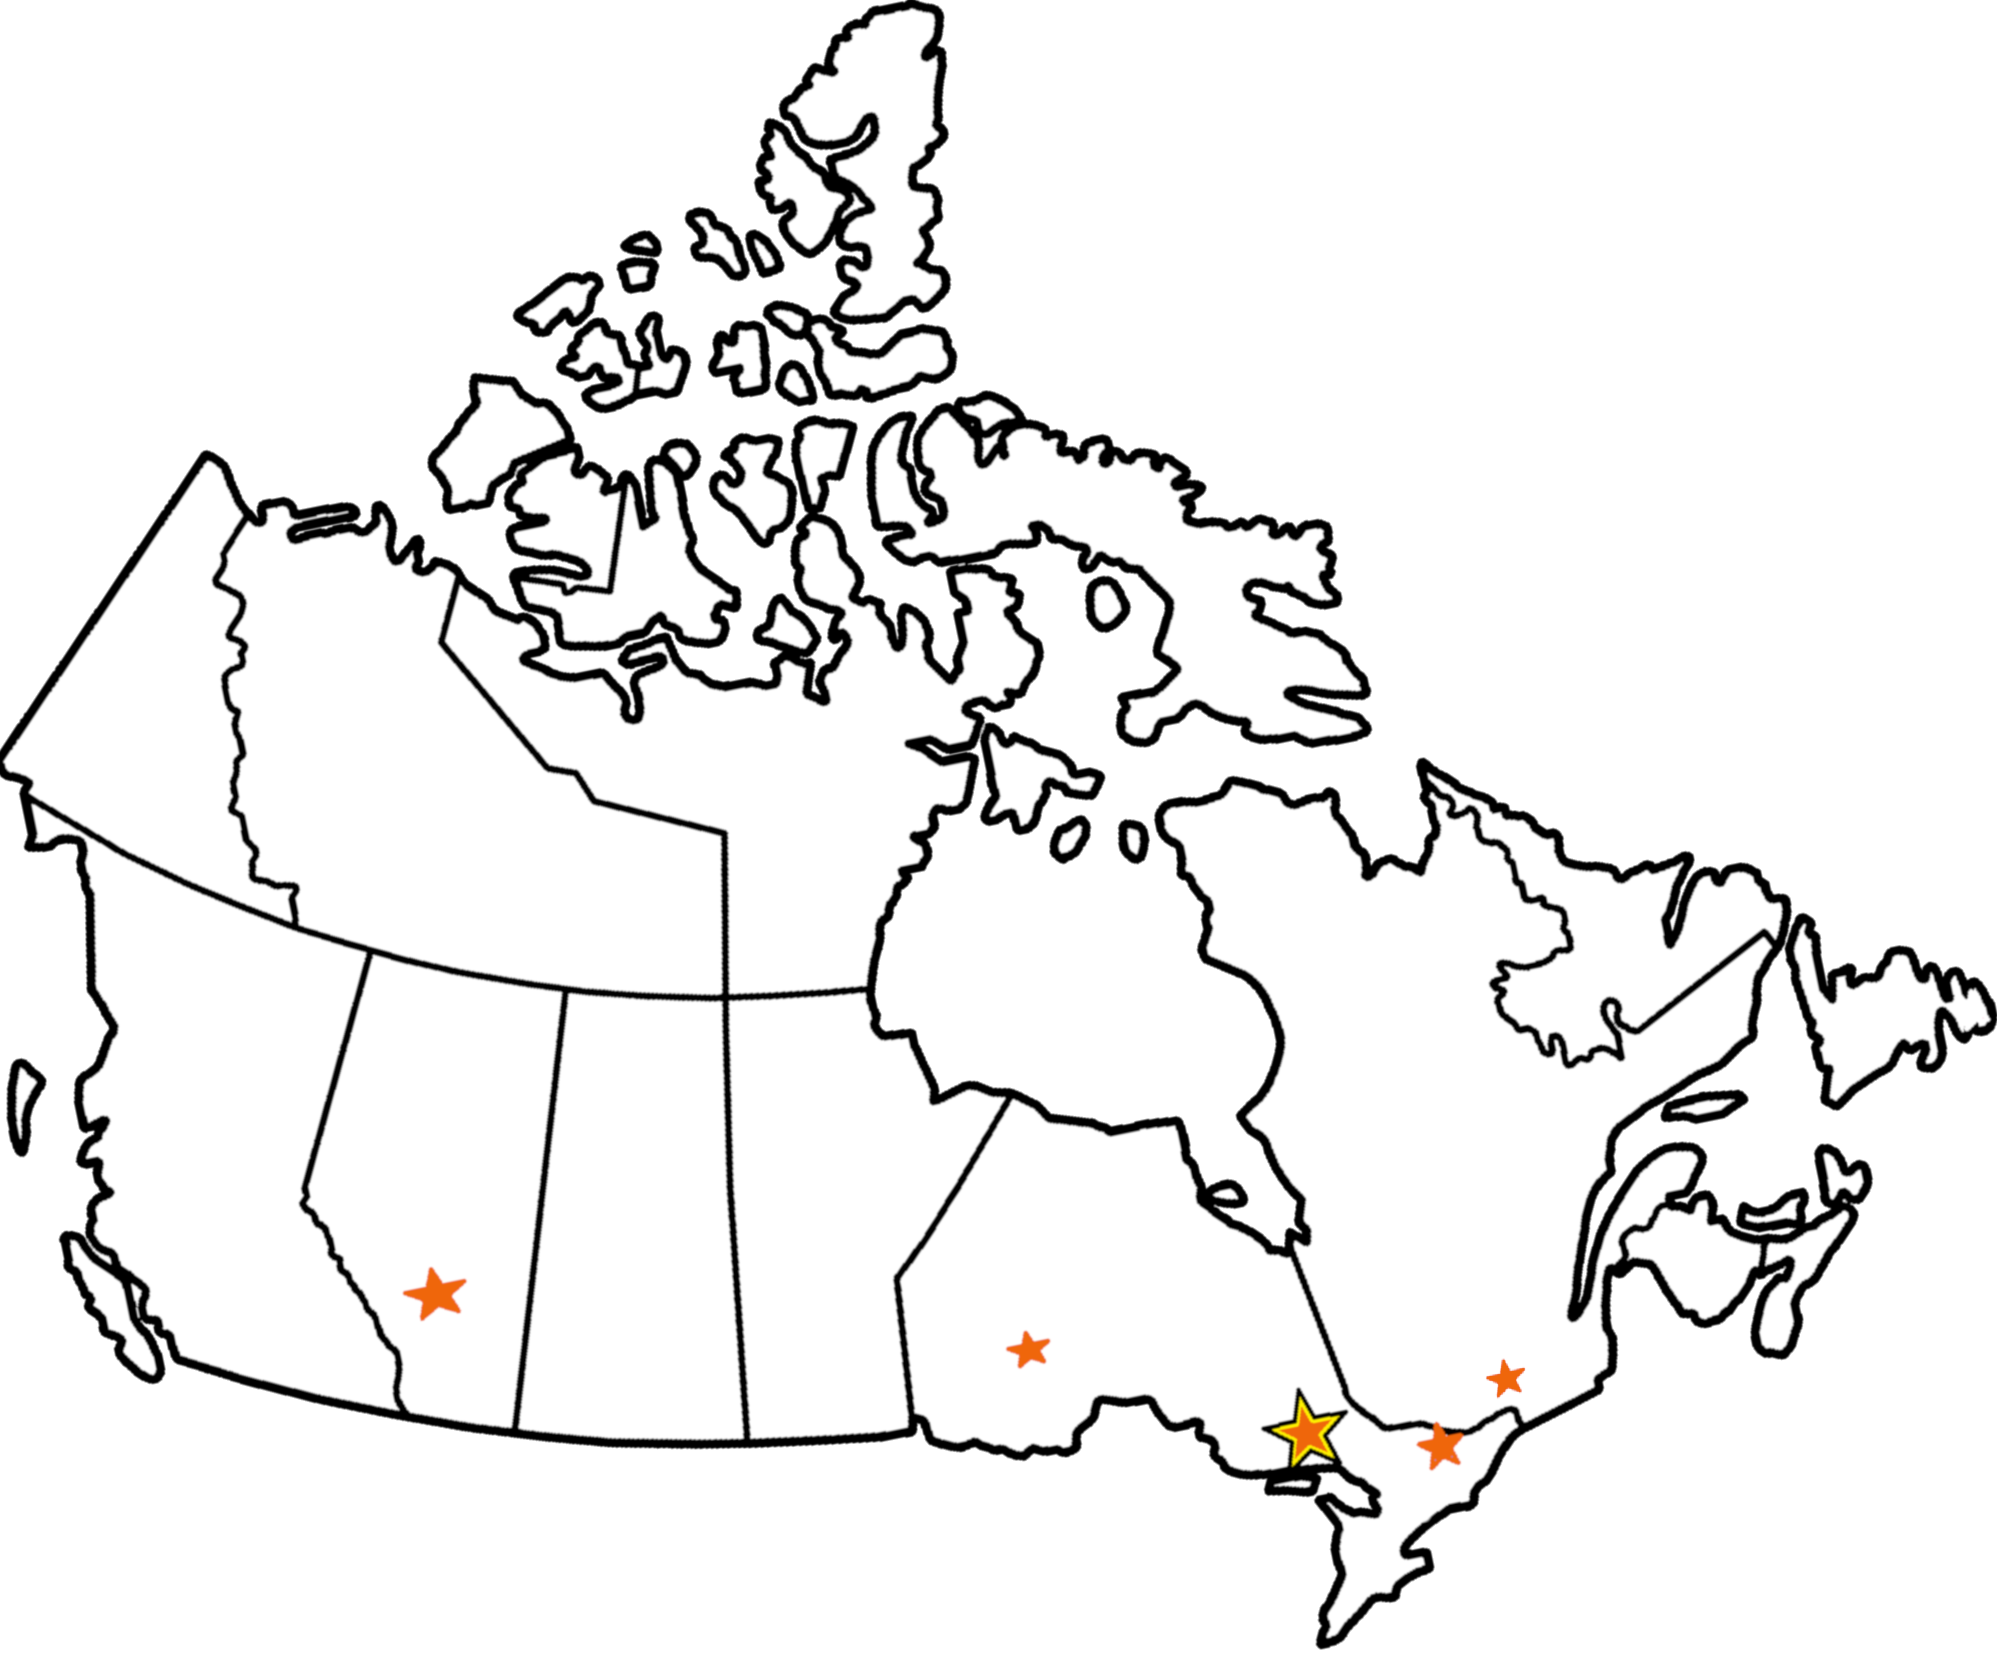 Canada_provinces_blank2-2-1